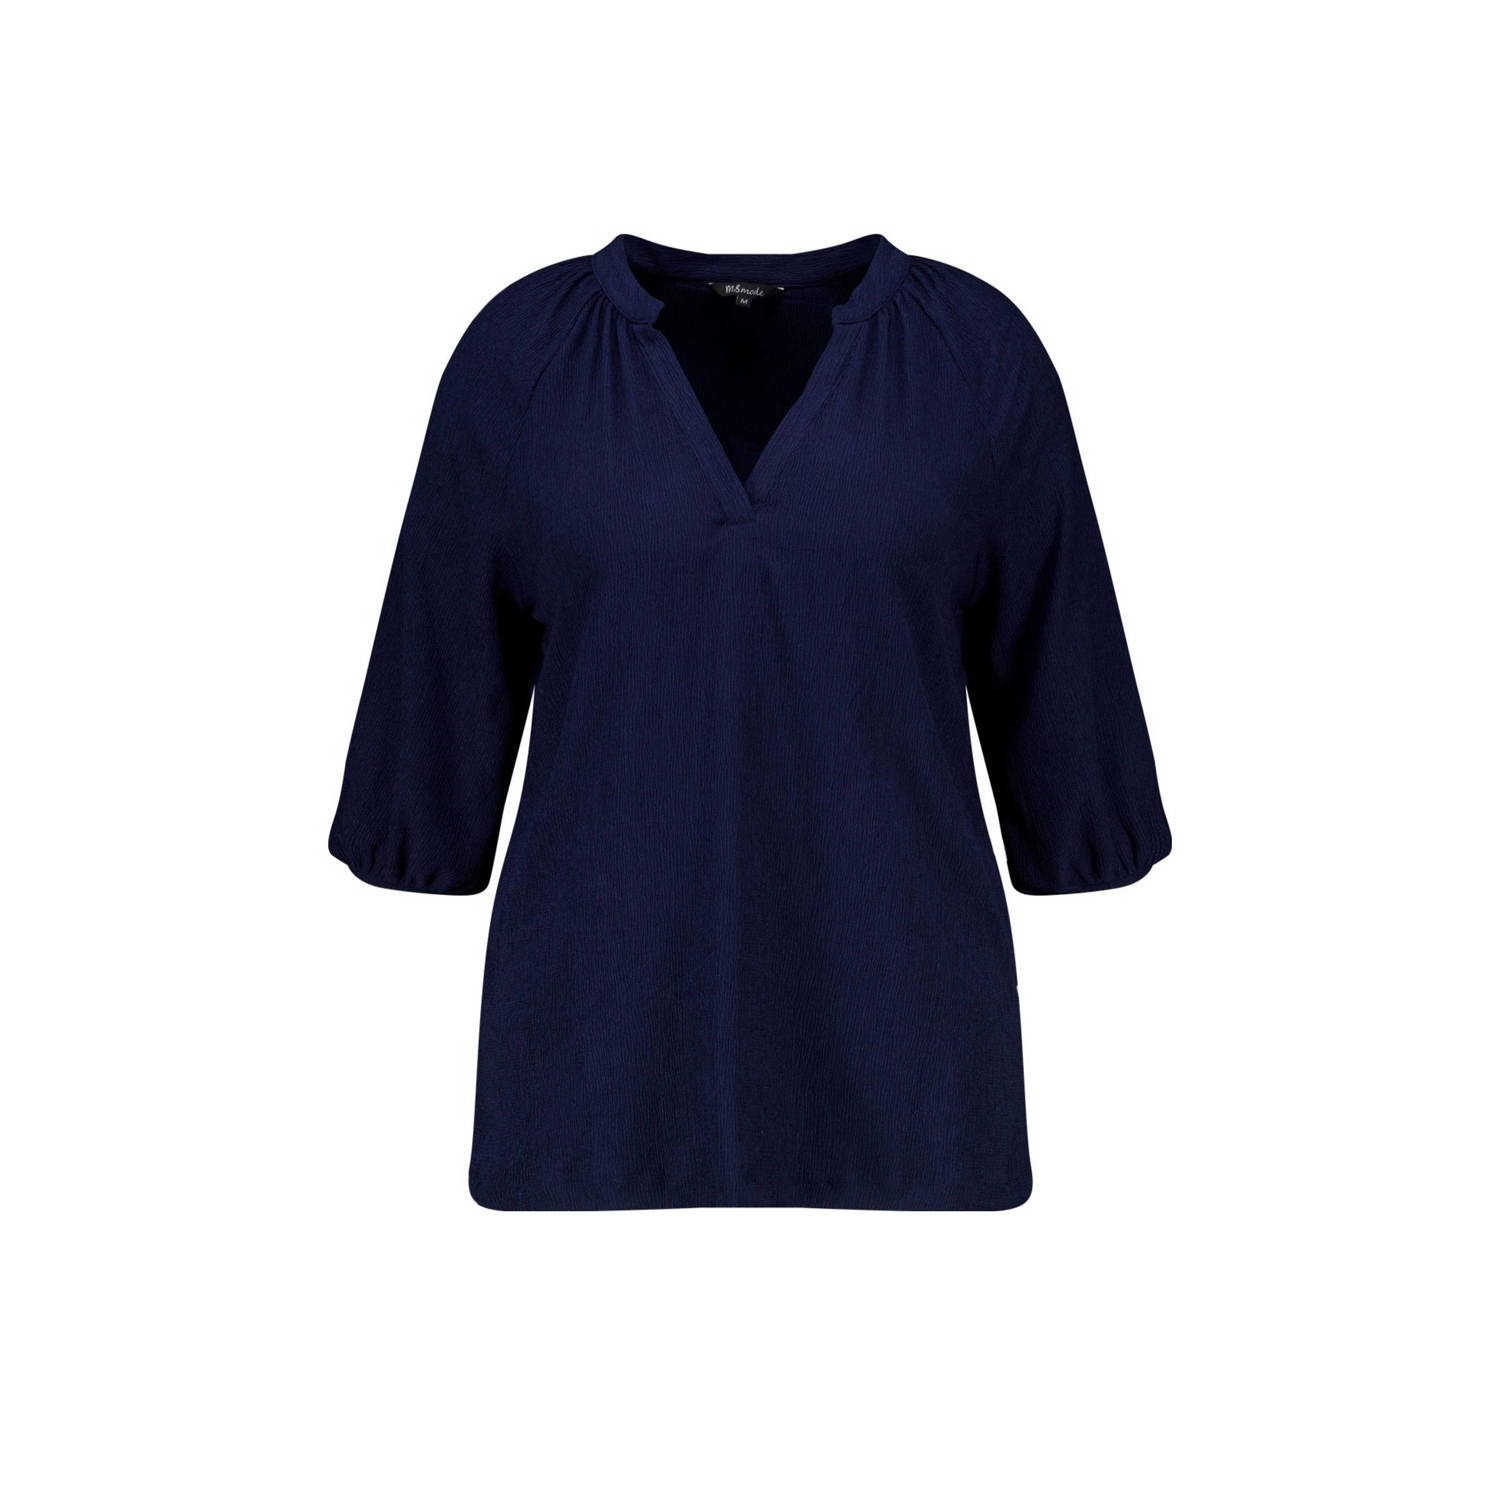 MS Mode blousetop donkerblauw